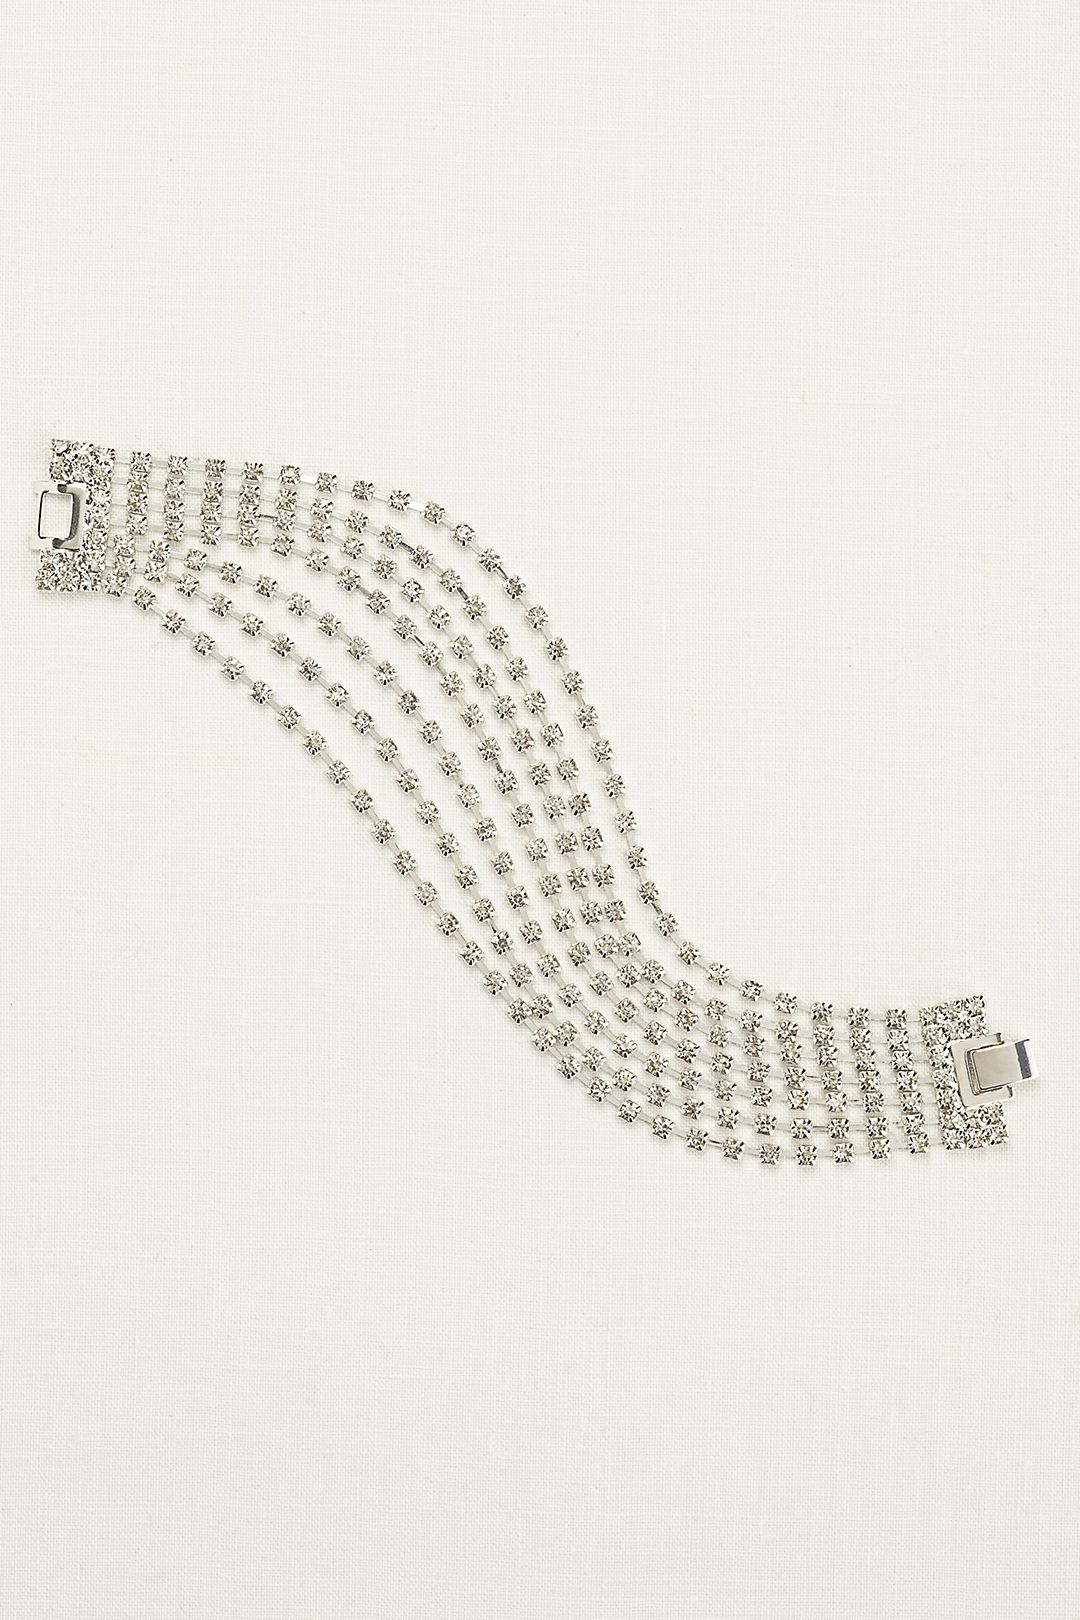 Seven Row Crystal Clasp Bracelet Image 3